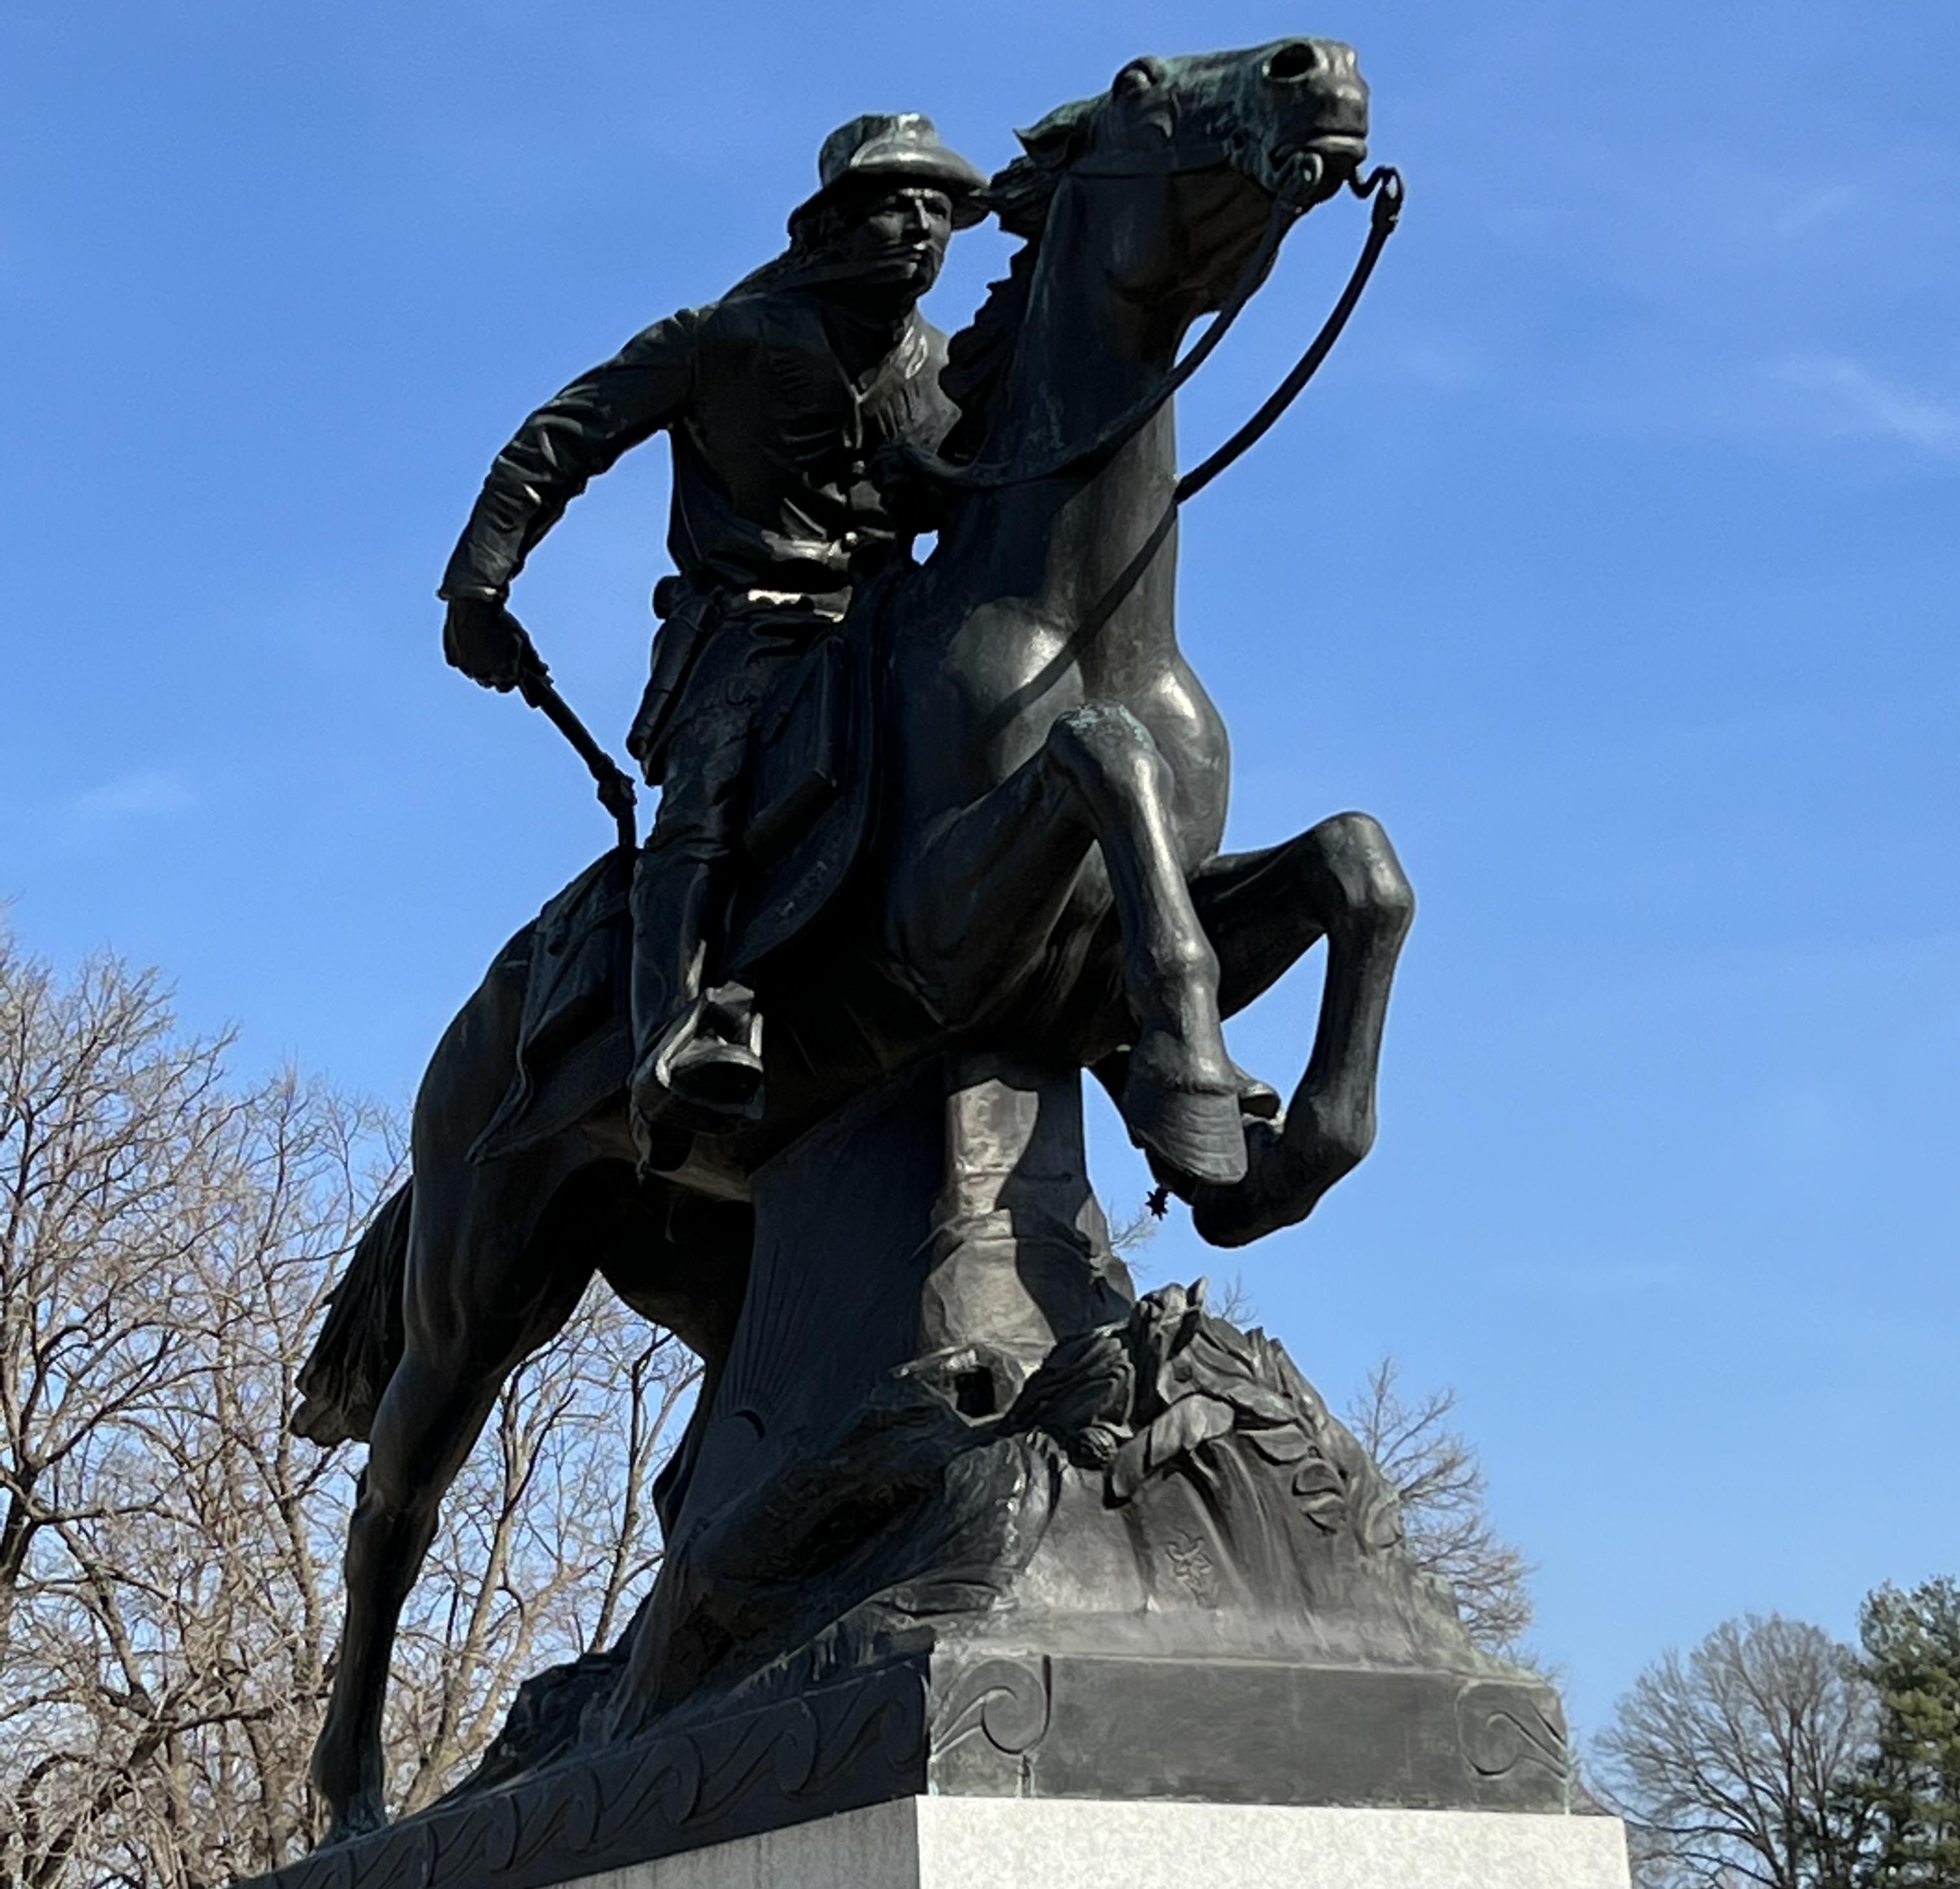 Pony Express Monument in Saint Joseph Missouri